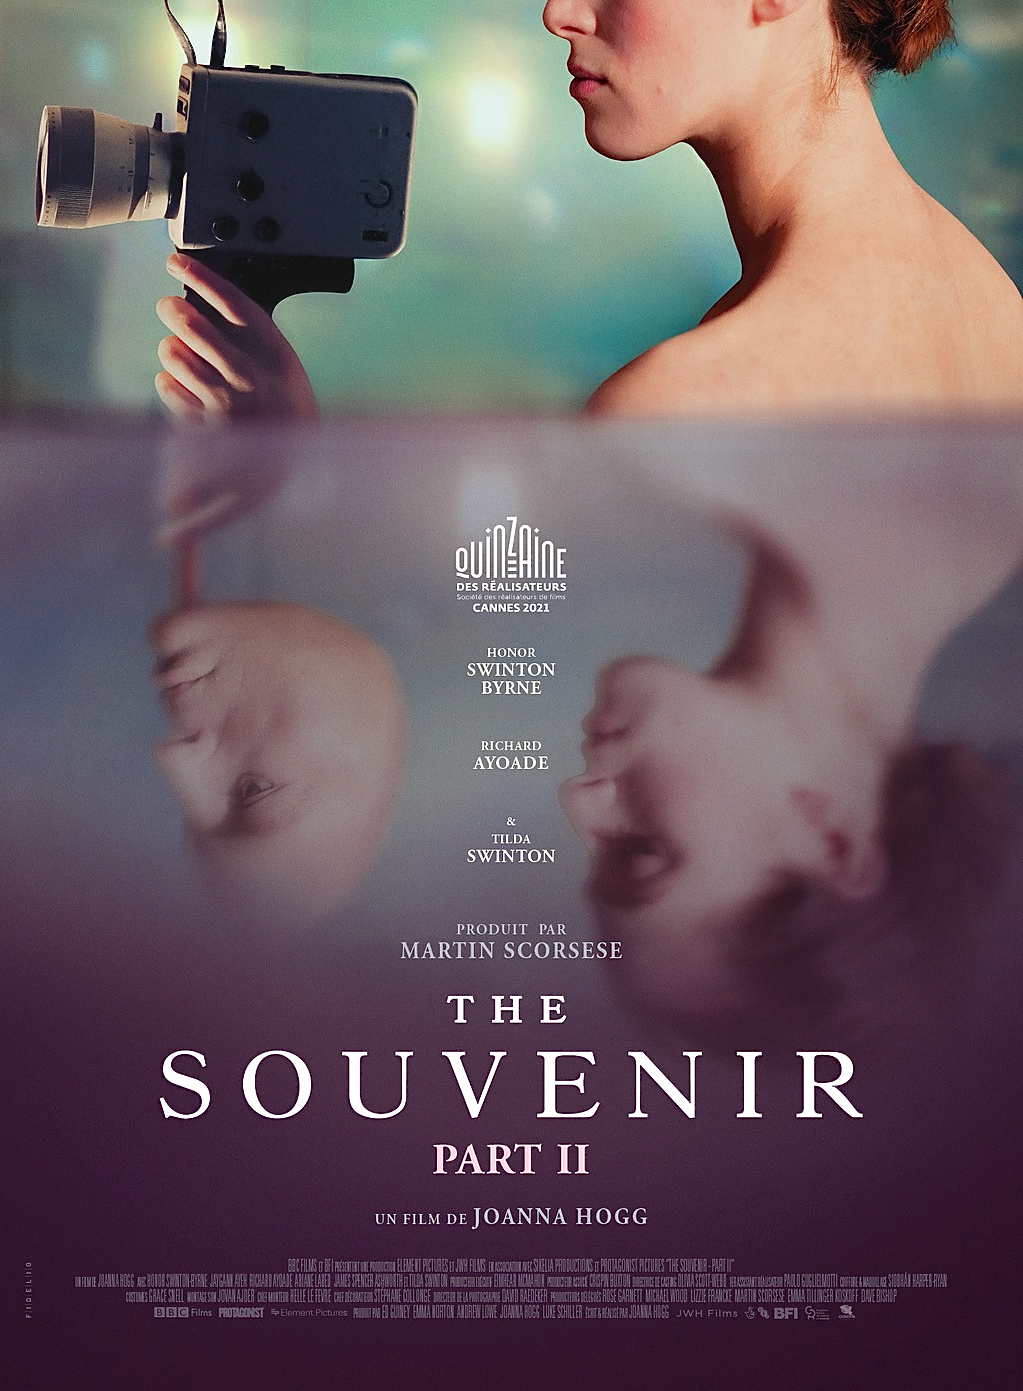 The Souvenir - Part II - Film (2021) streaming VF gratuit complet